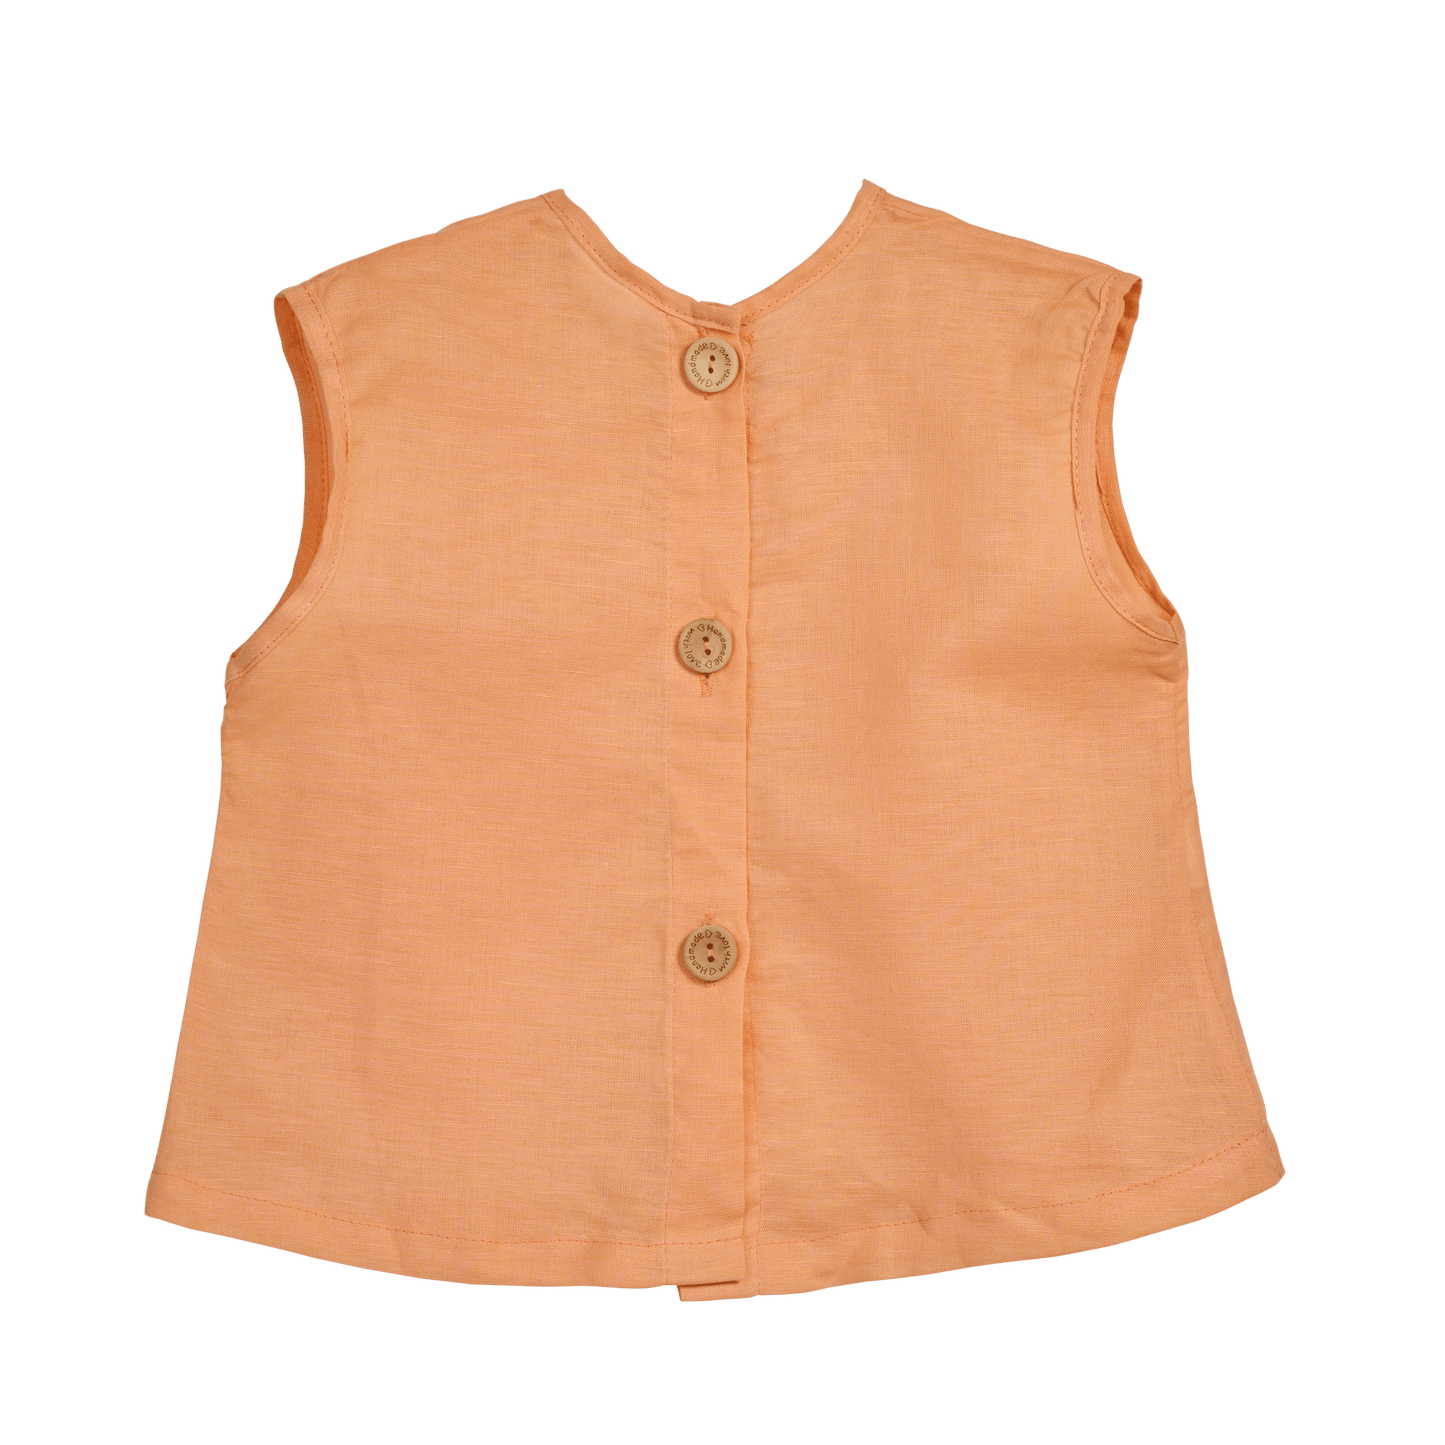 The Summer Breeze Shirt (boys - orange/light gray/pale green) - CooCootales